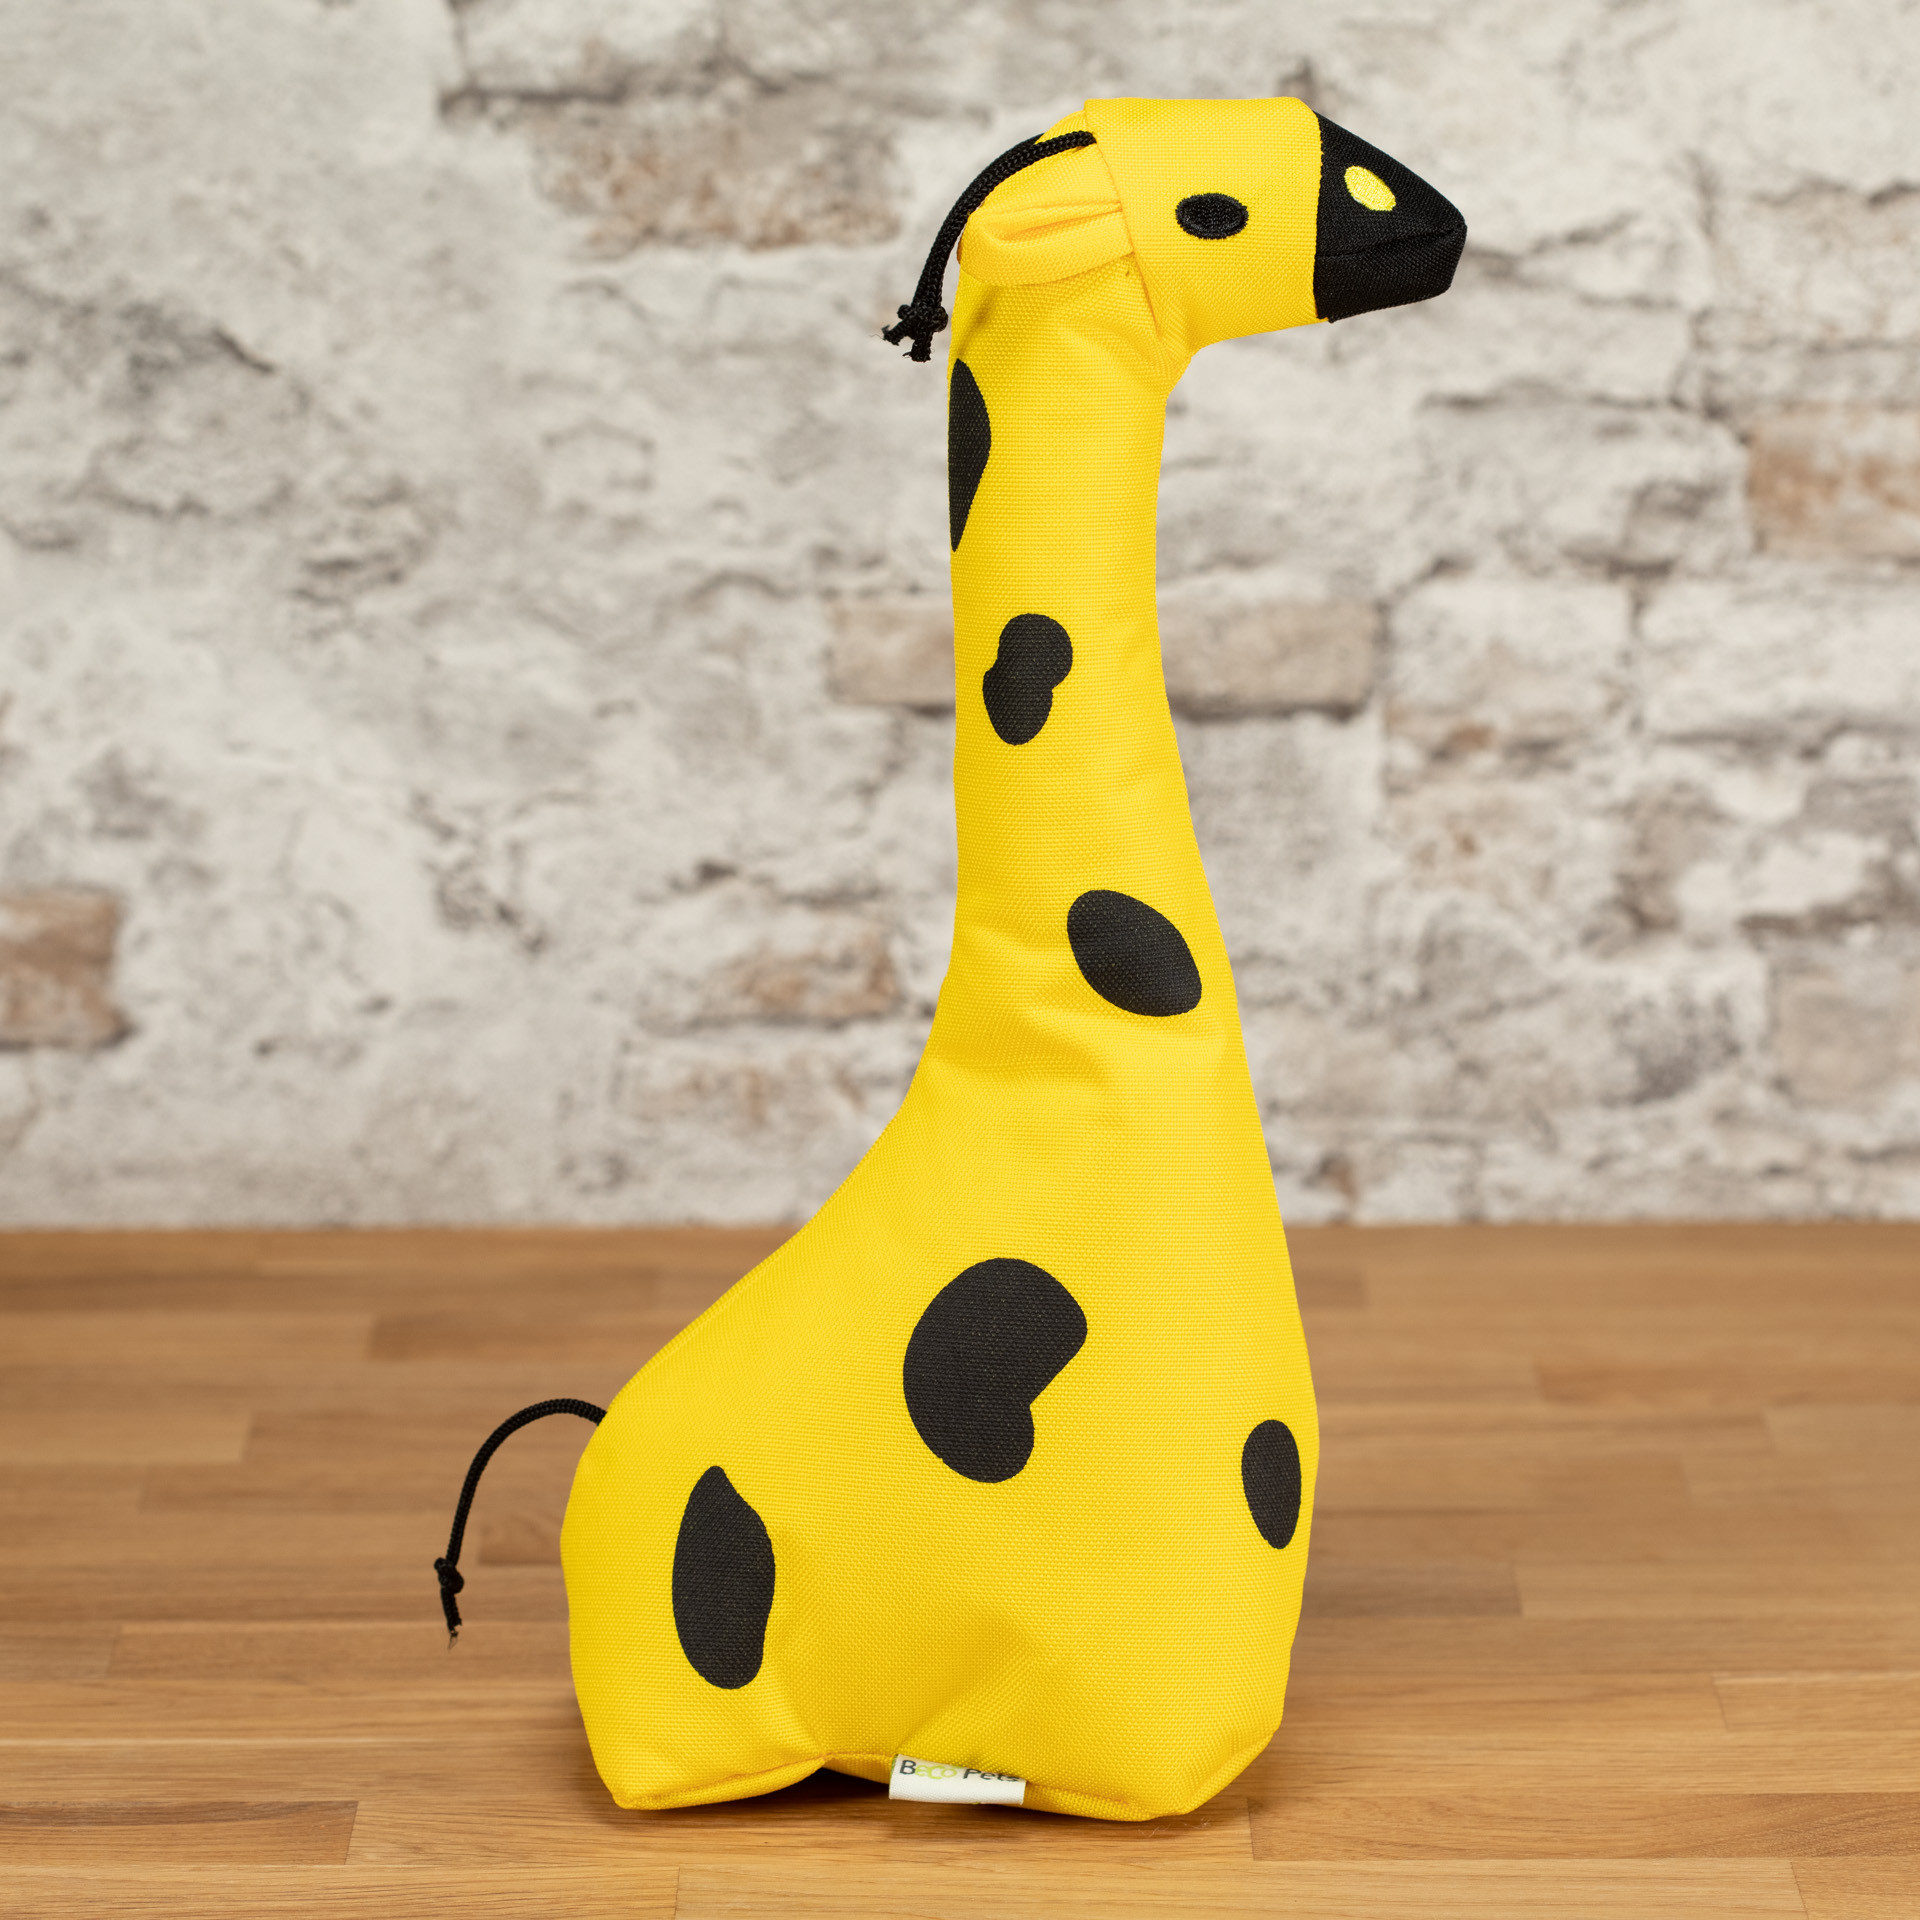 Hundespielzeug George, die Giraffe